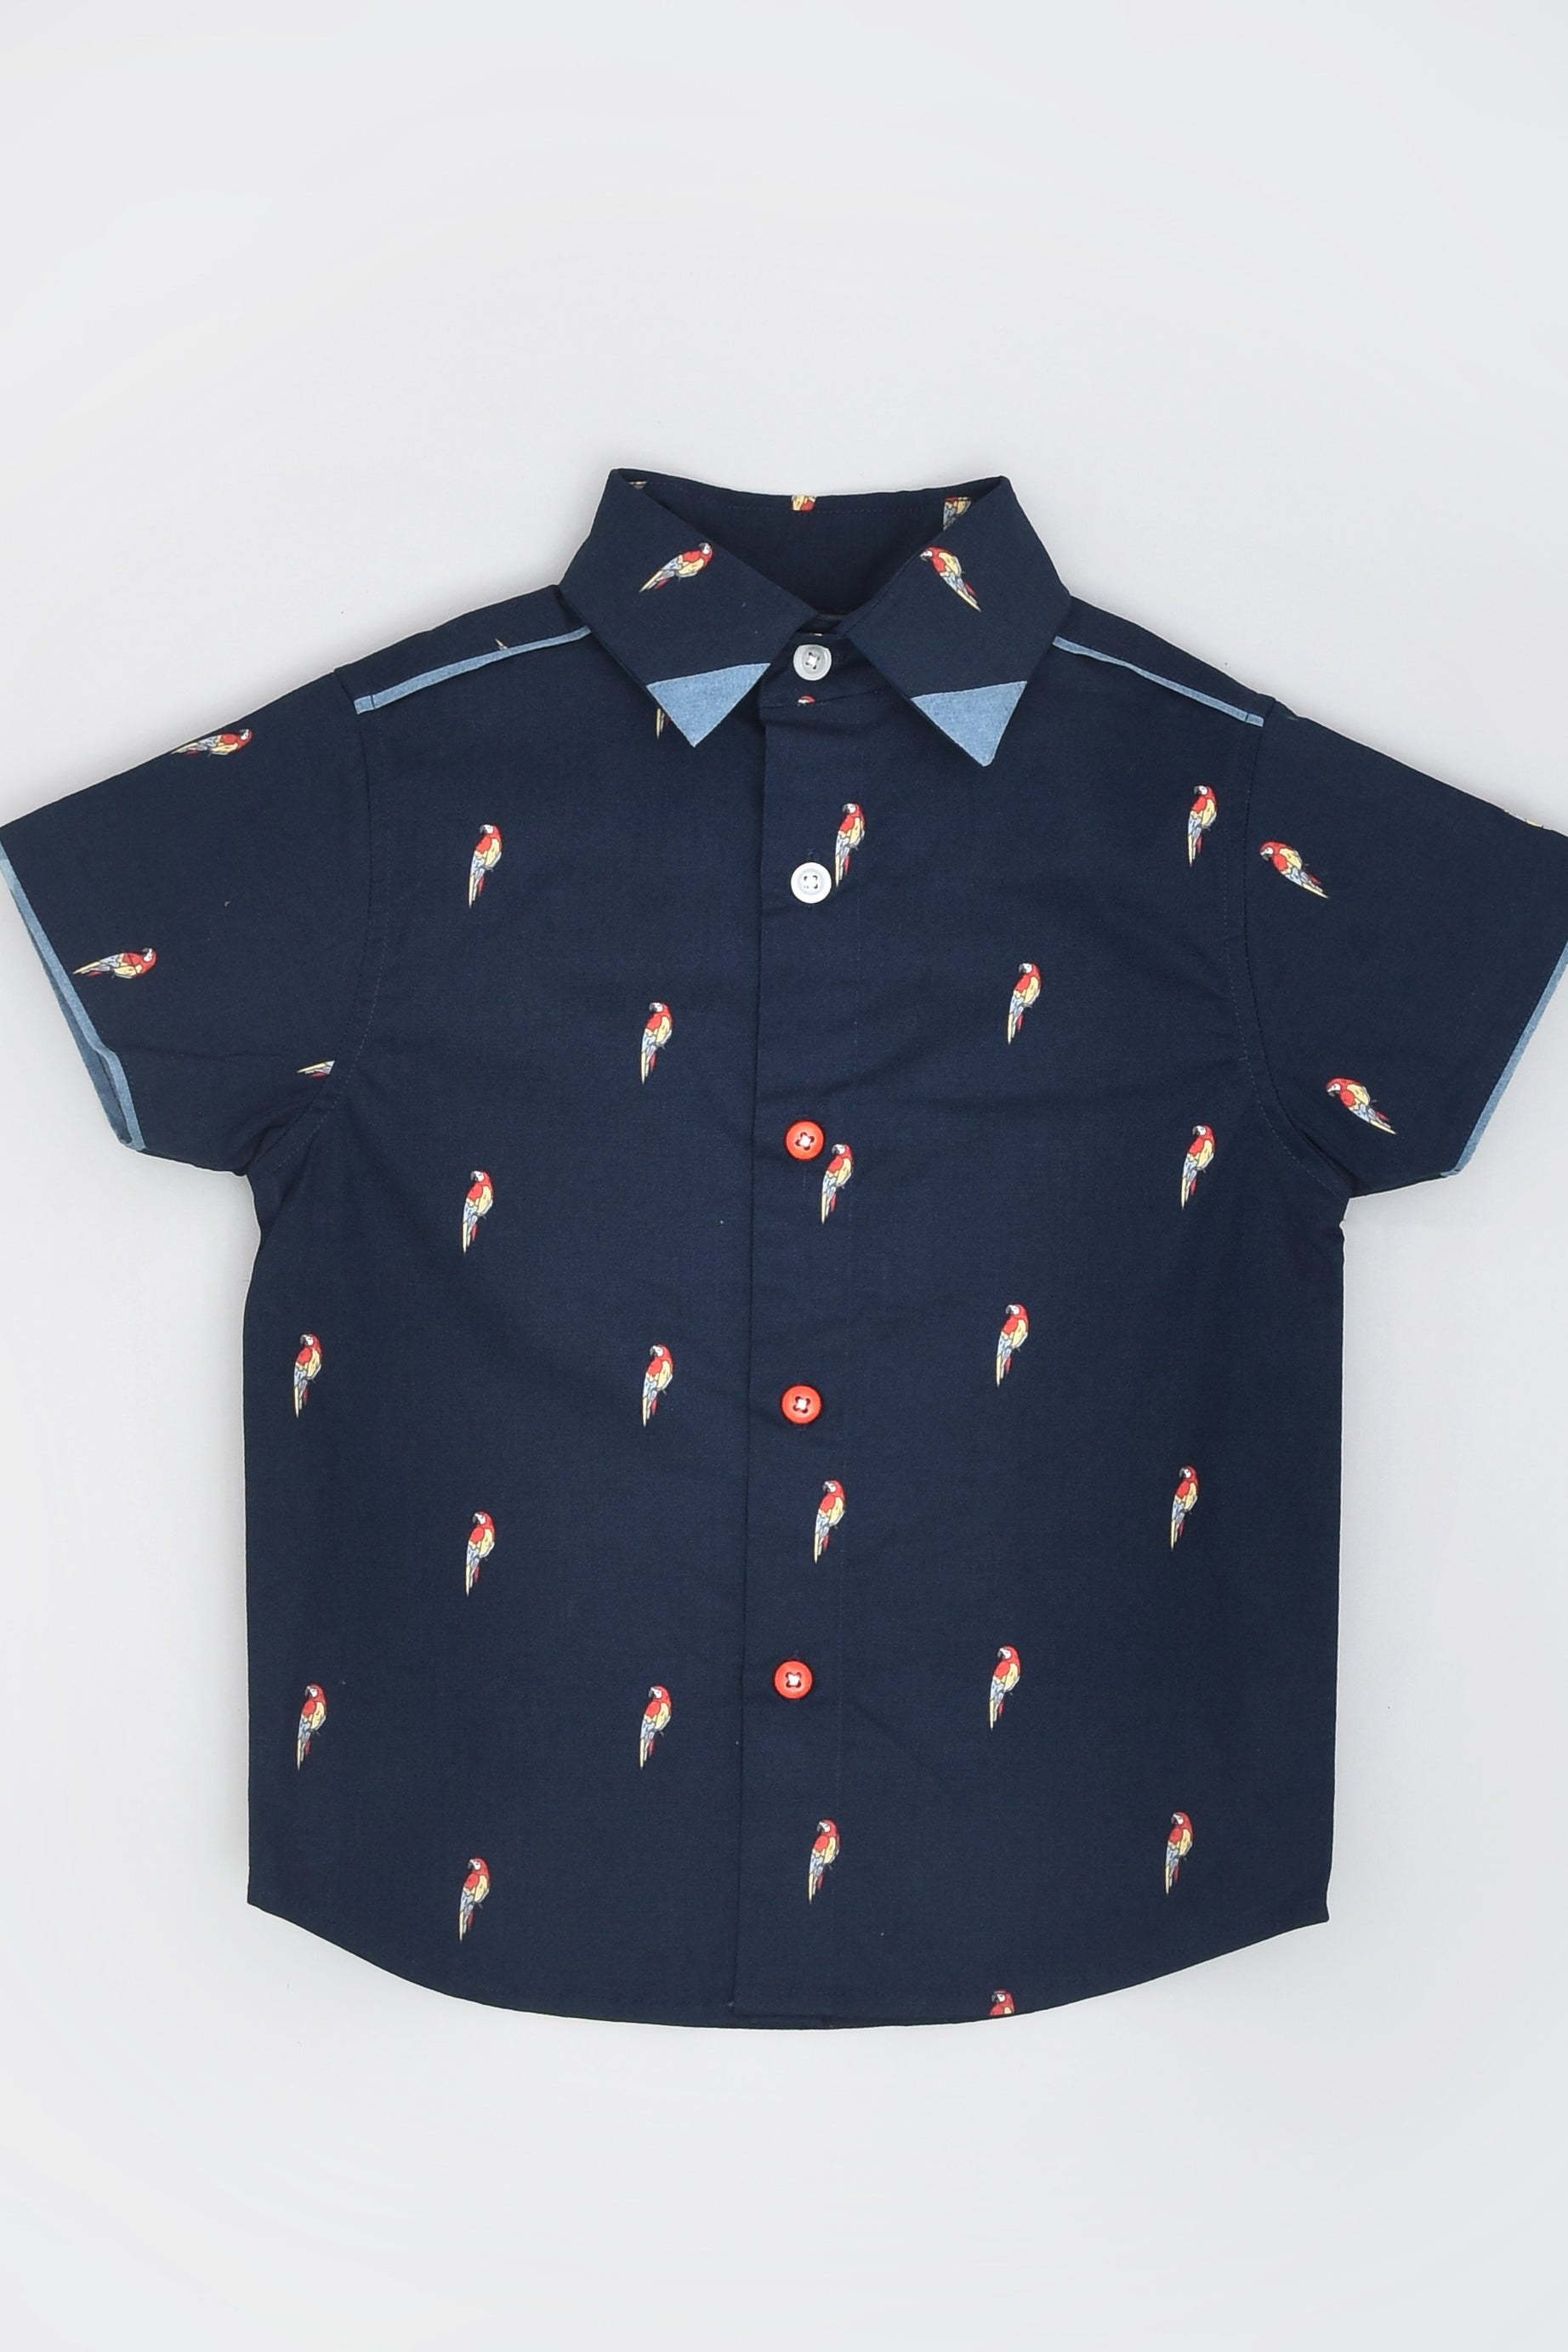 Parrot Print Shirt